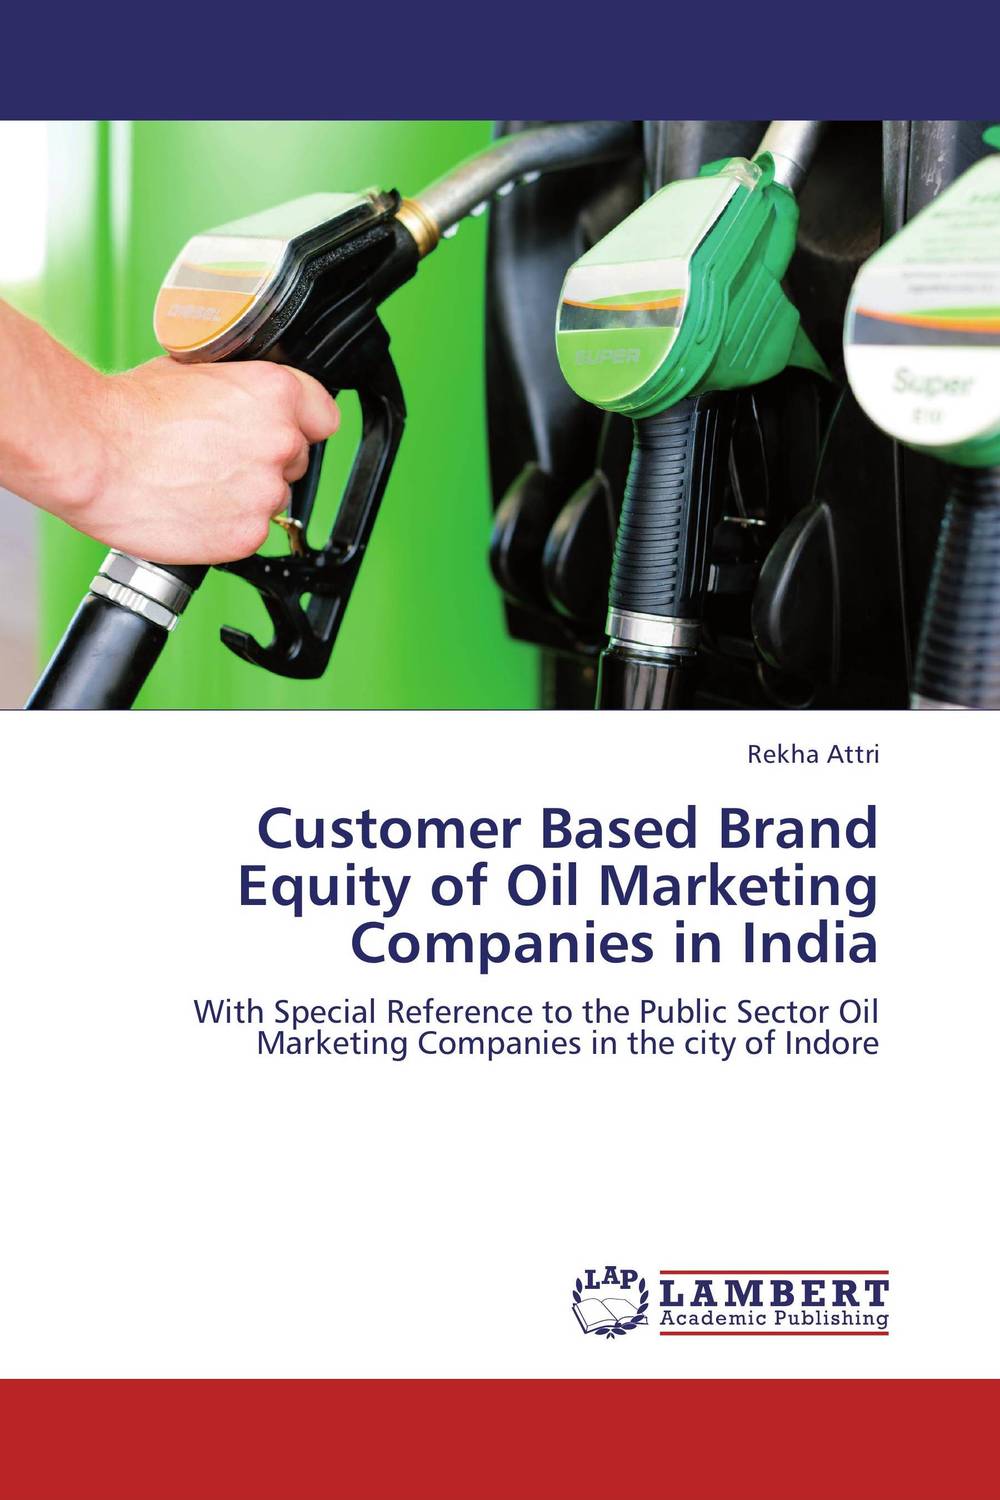 фото Customer Based Brand Equity of Oil Marketing Companies in India Lap lambert academic publishing